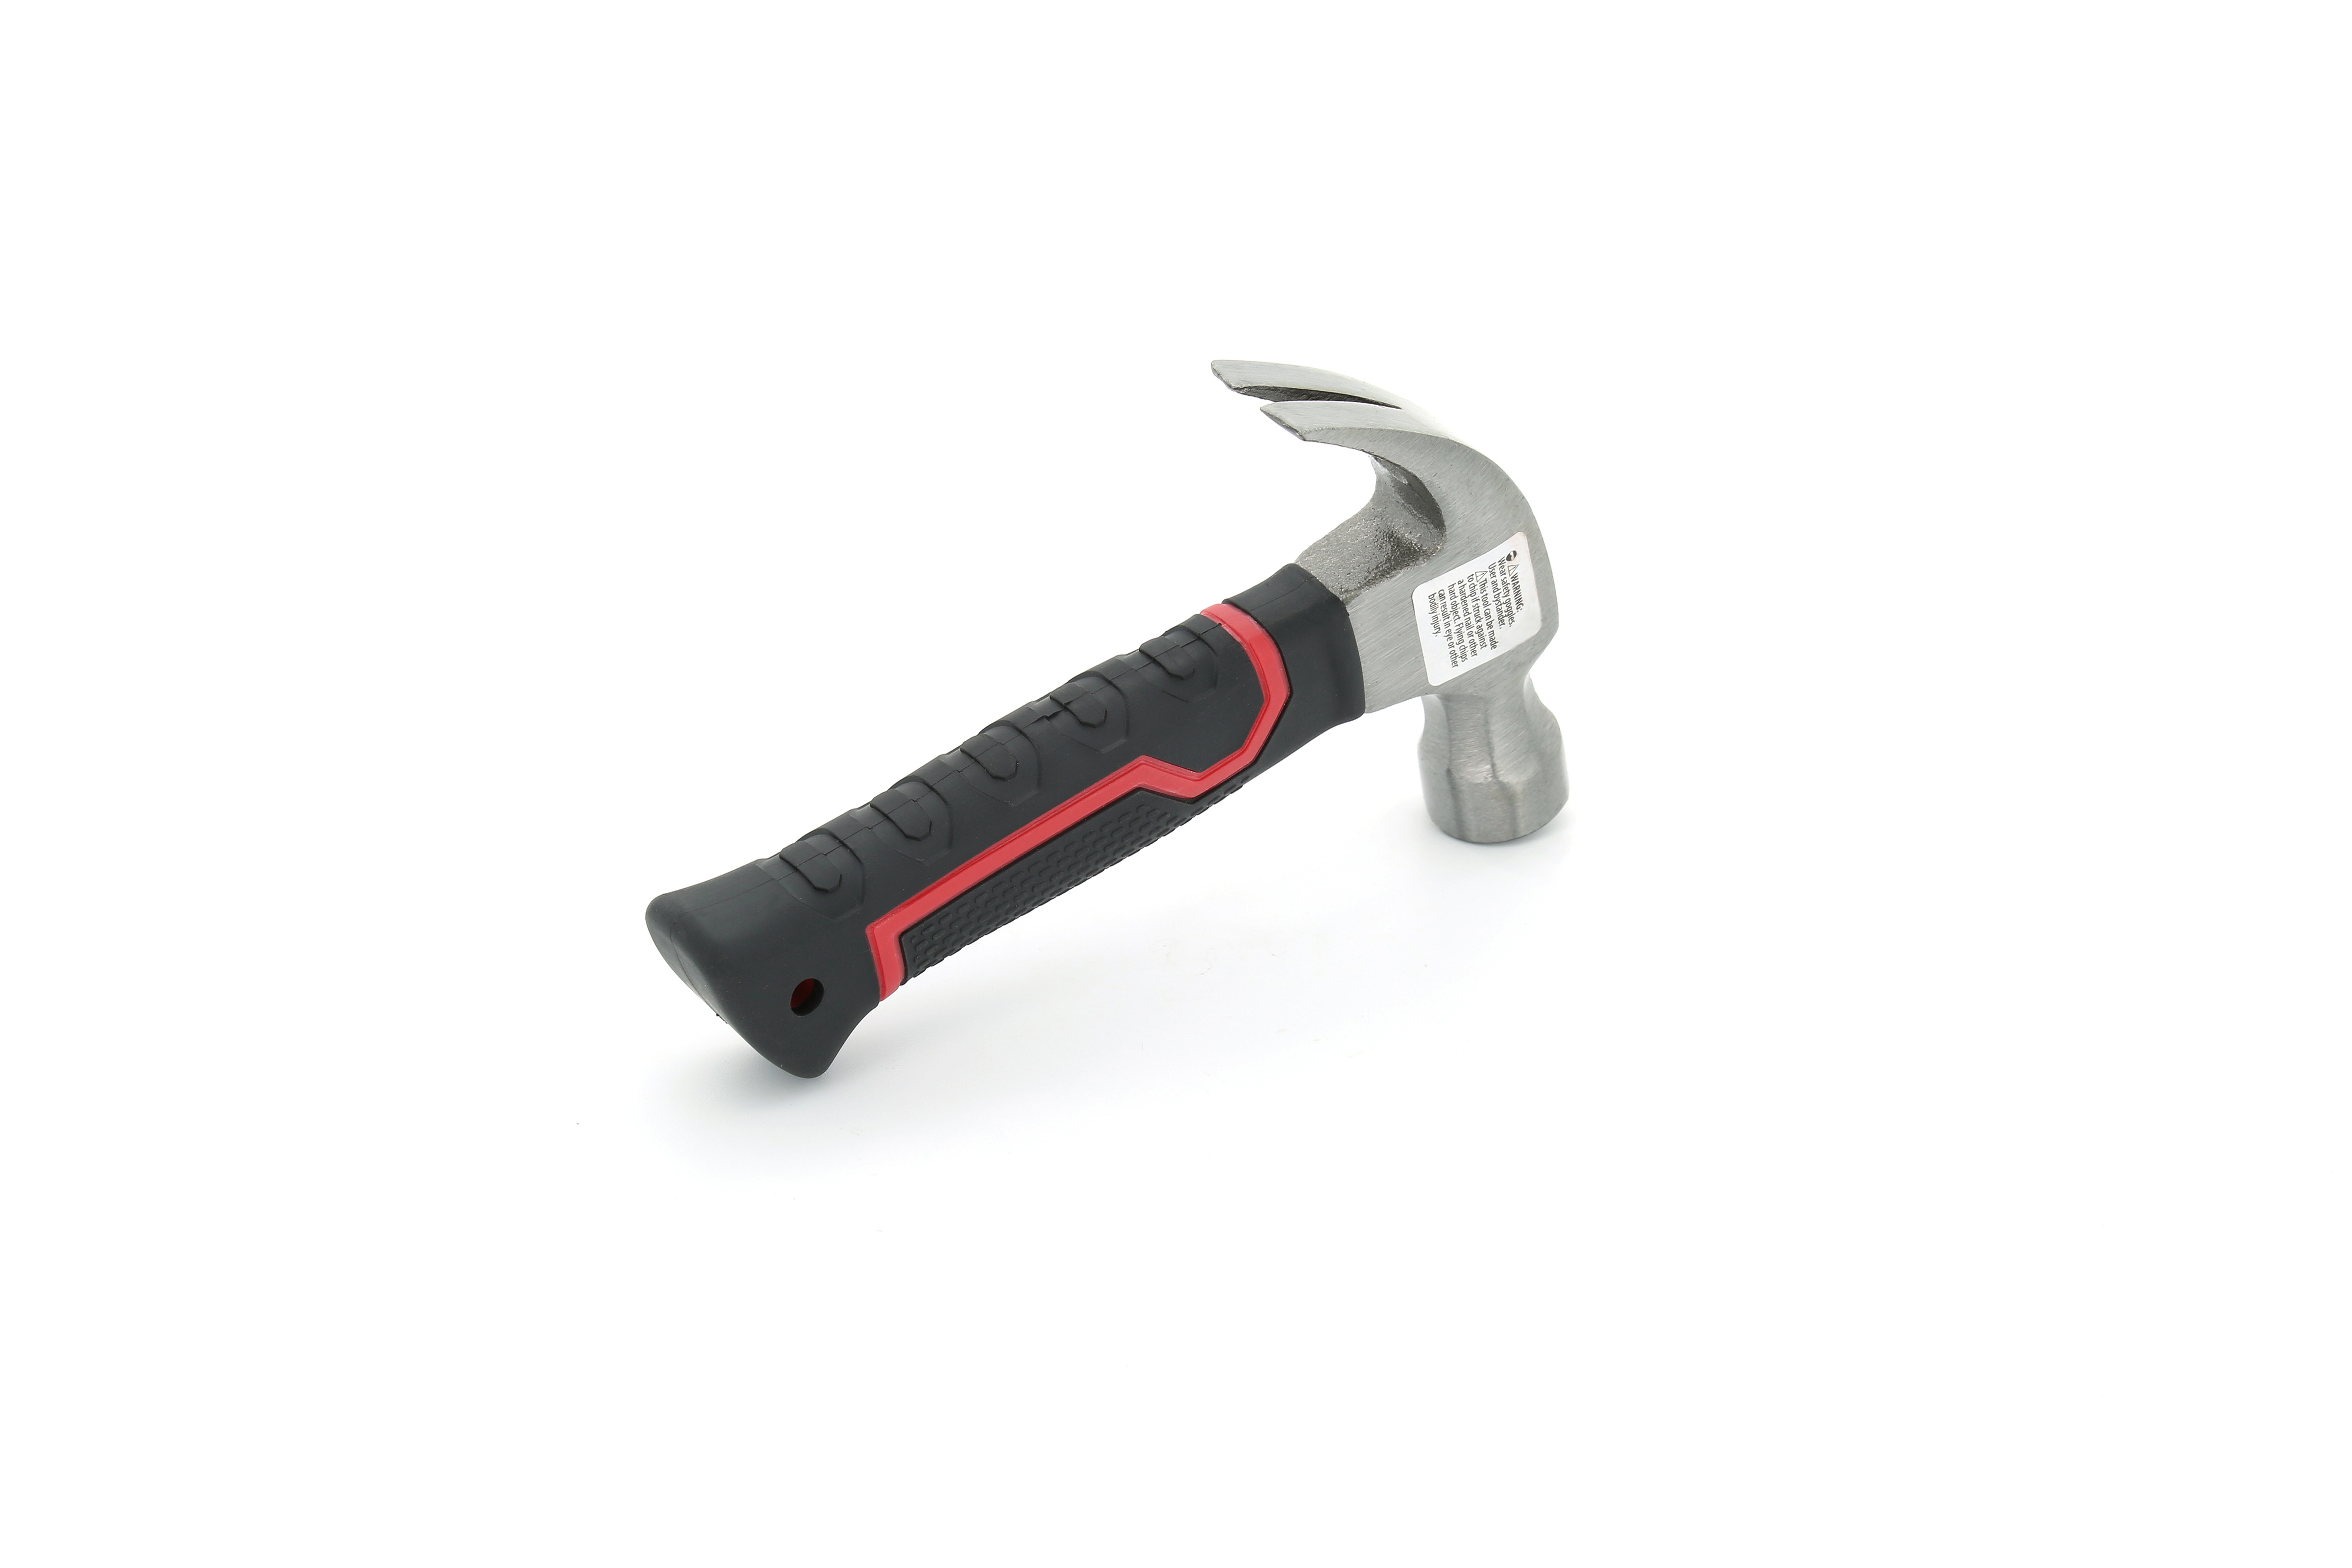 SE Chasing Hammer - Quality Built Ergonomic Grip Hammer- Dual Face  Lightweight Tool - 8325CH